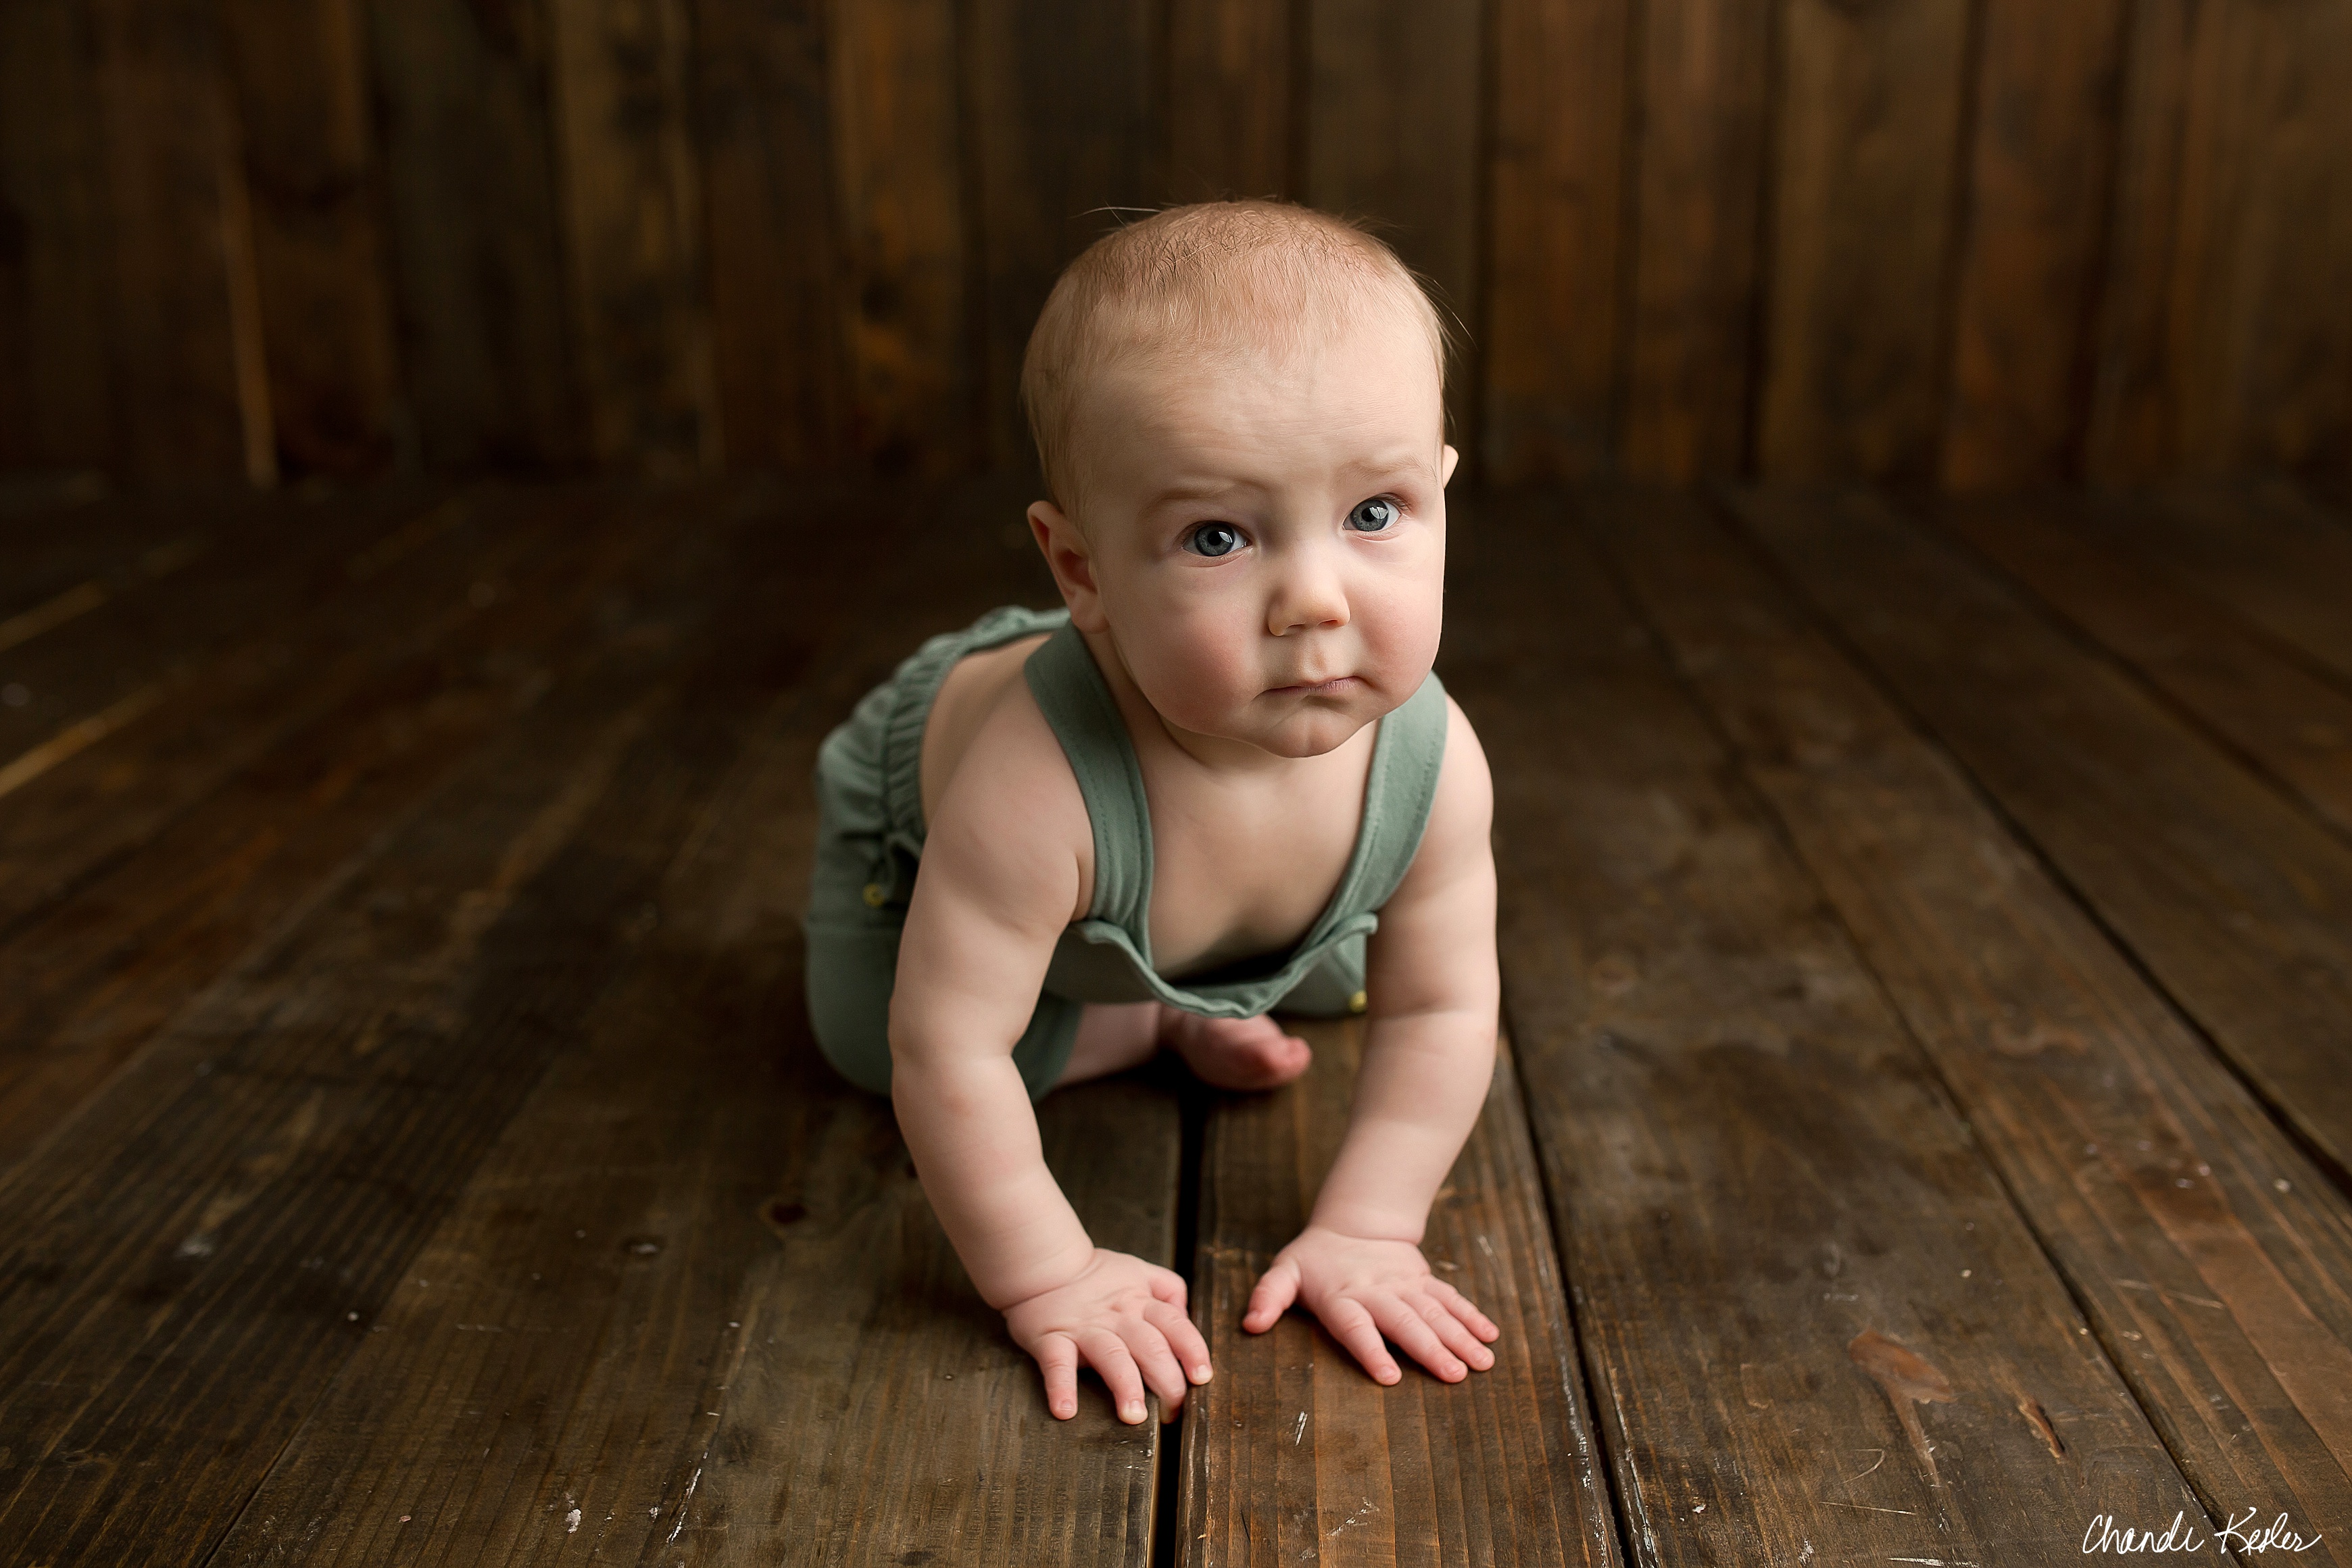 Champaign IL Photographer | 6 month boy session ideas | Chandi Kesler Photography